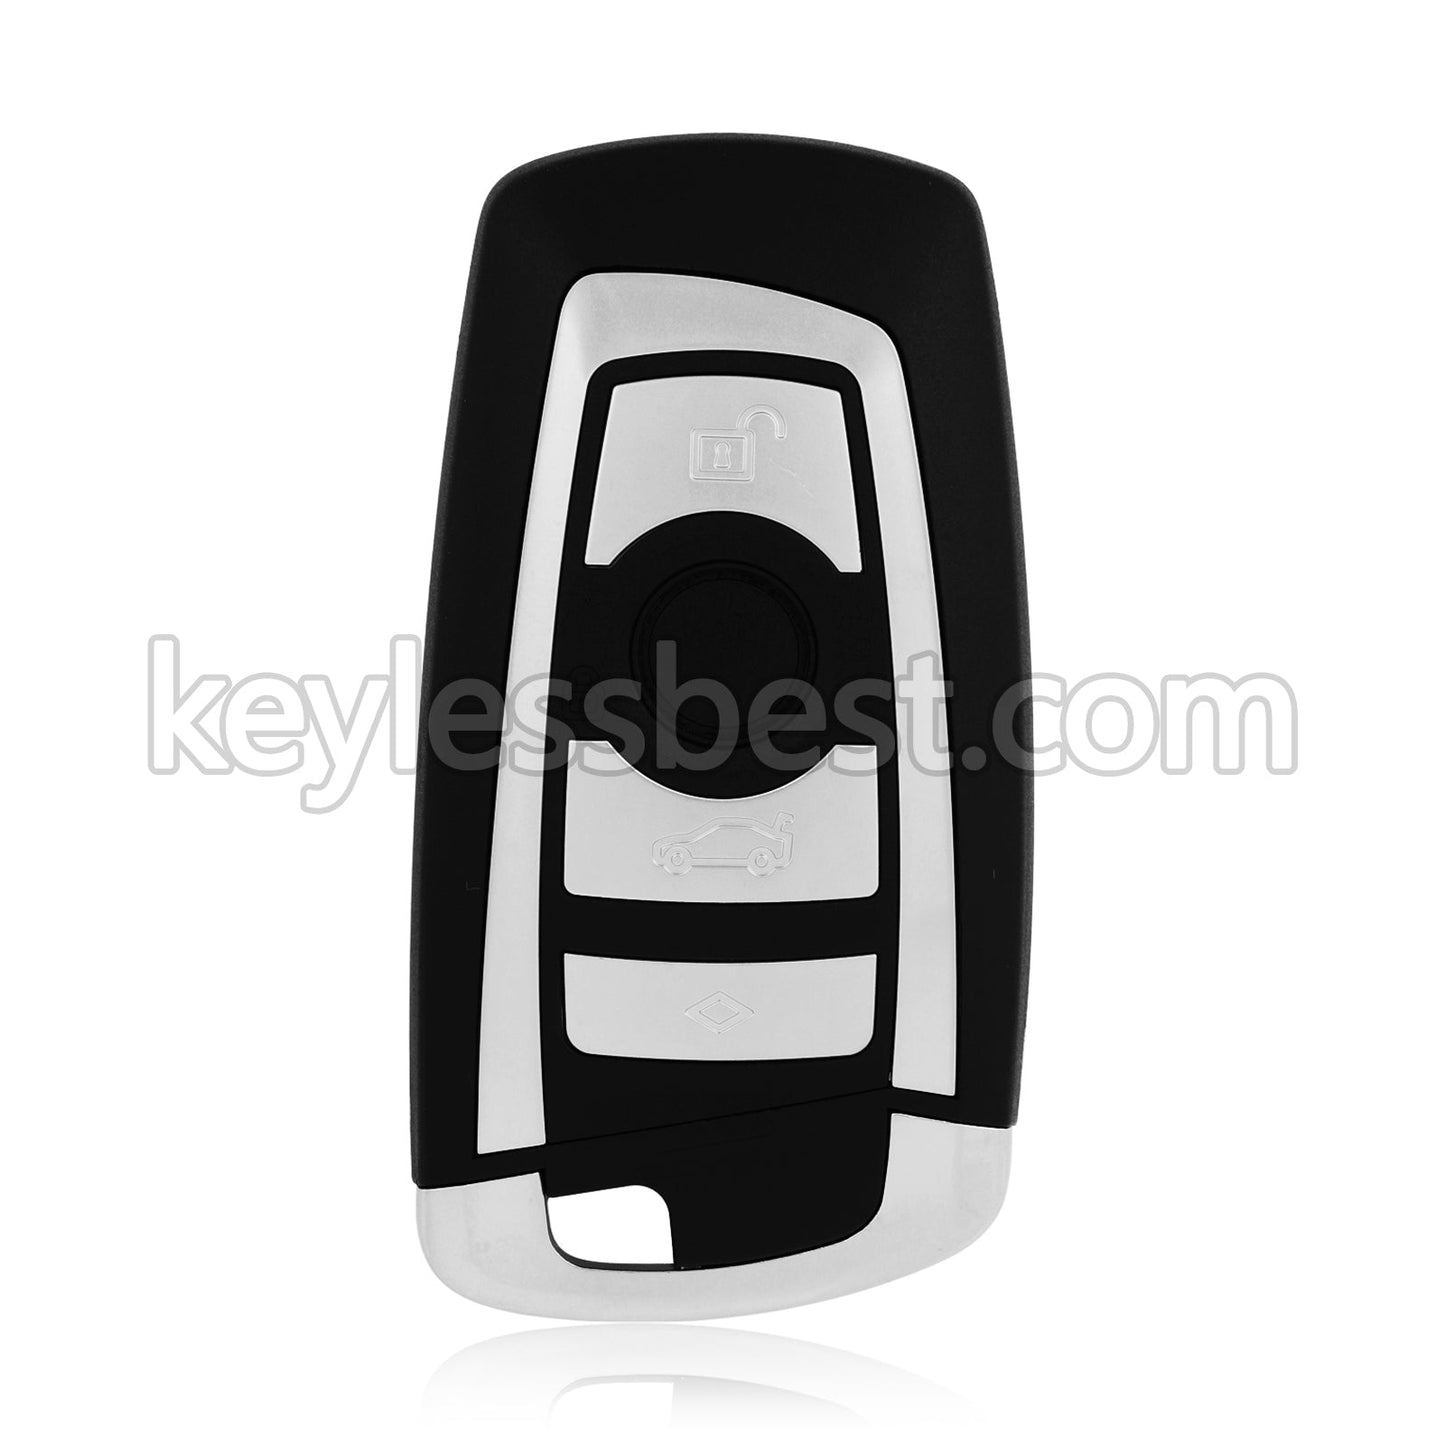 2009 - 2016 BMW 3 5 6 7 X3 Series / 4 Buttons Remote Key / KR55WK49863 / 868MHz